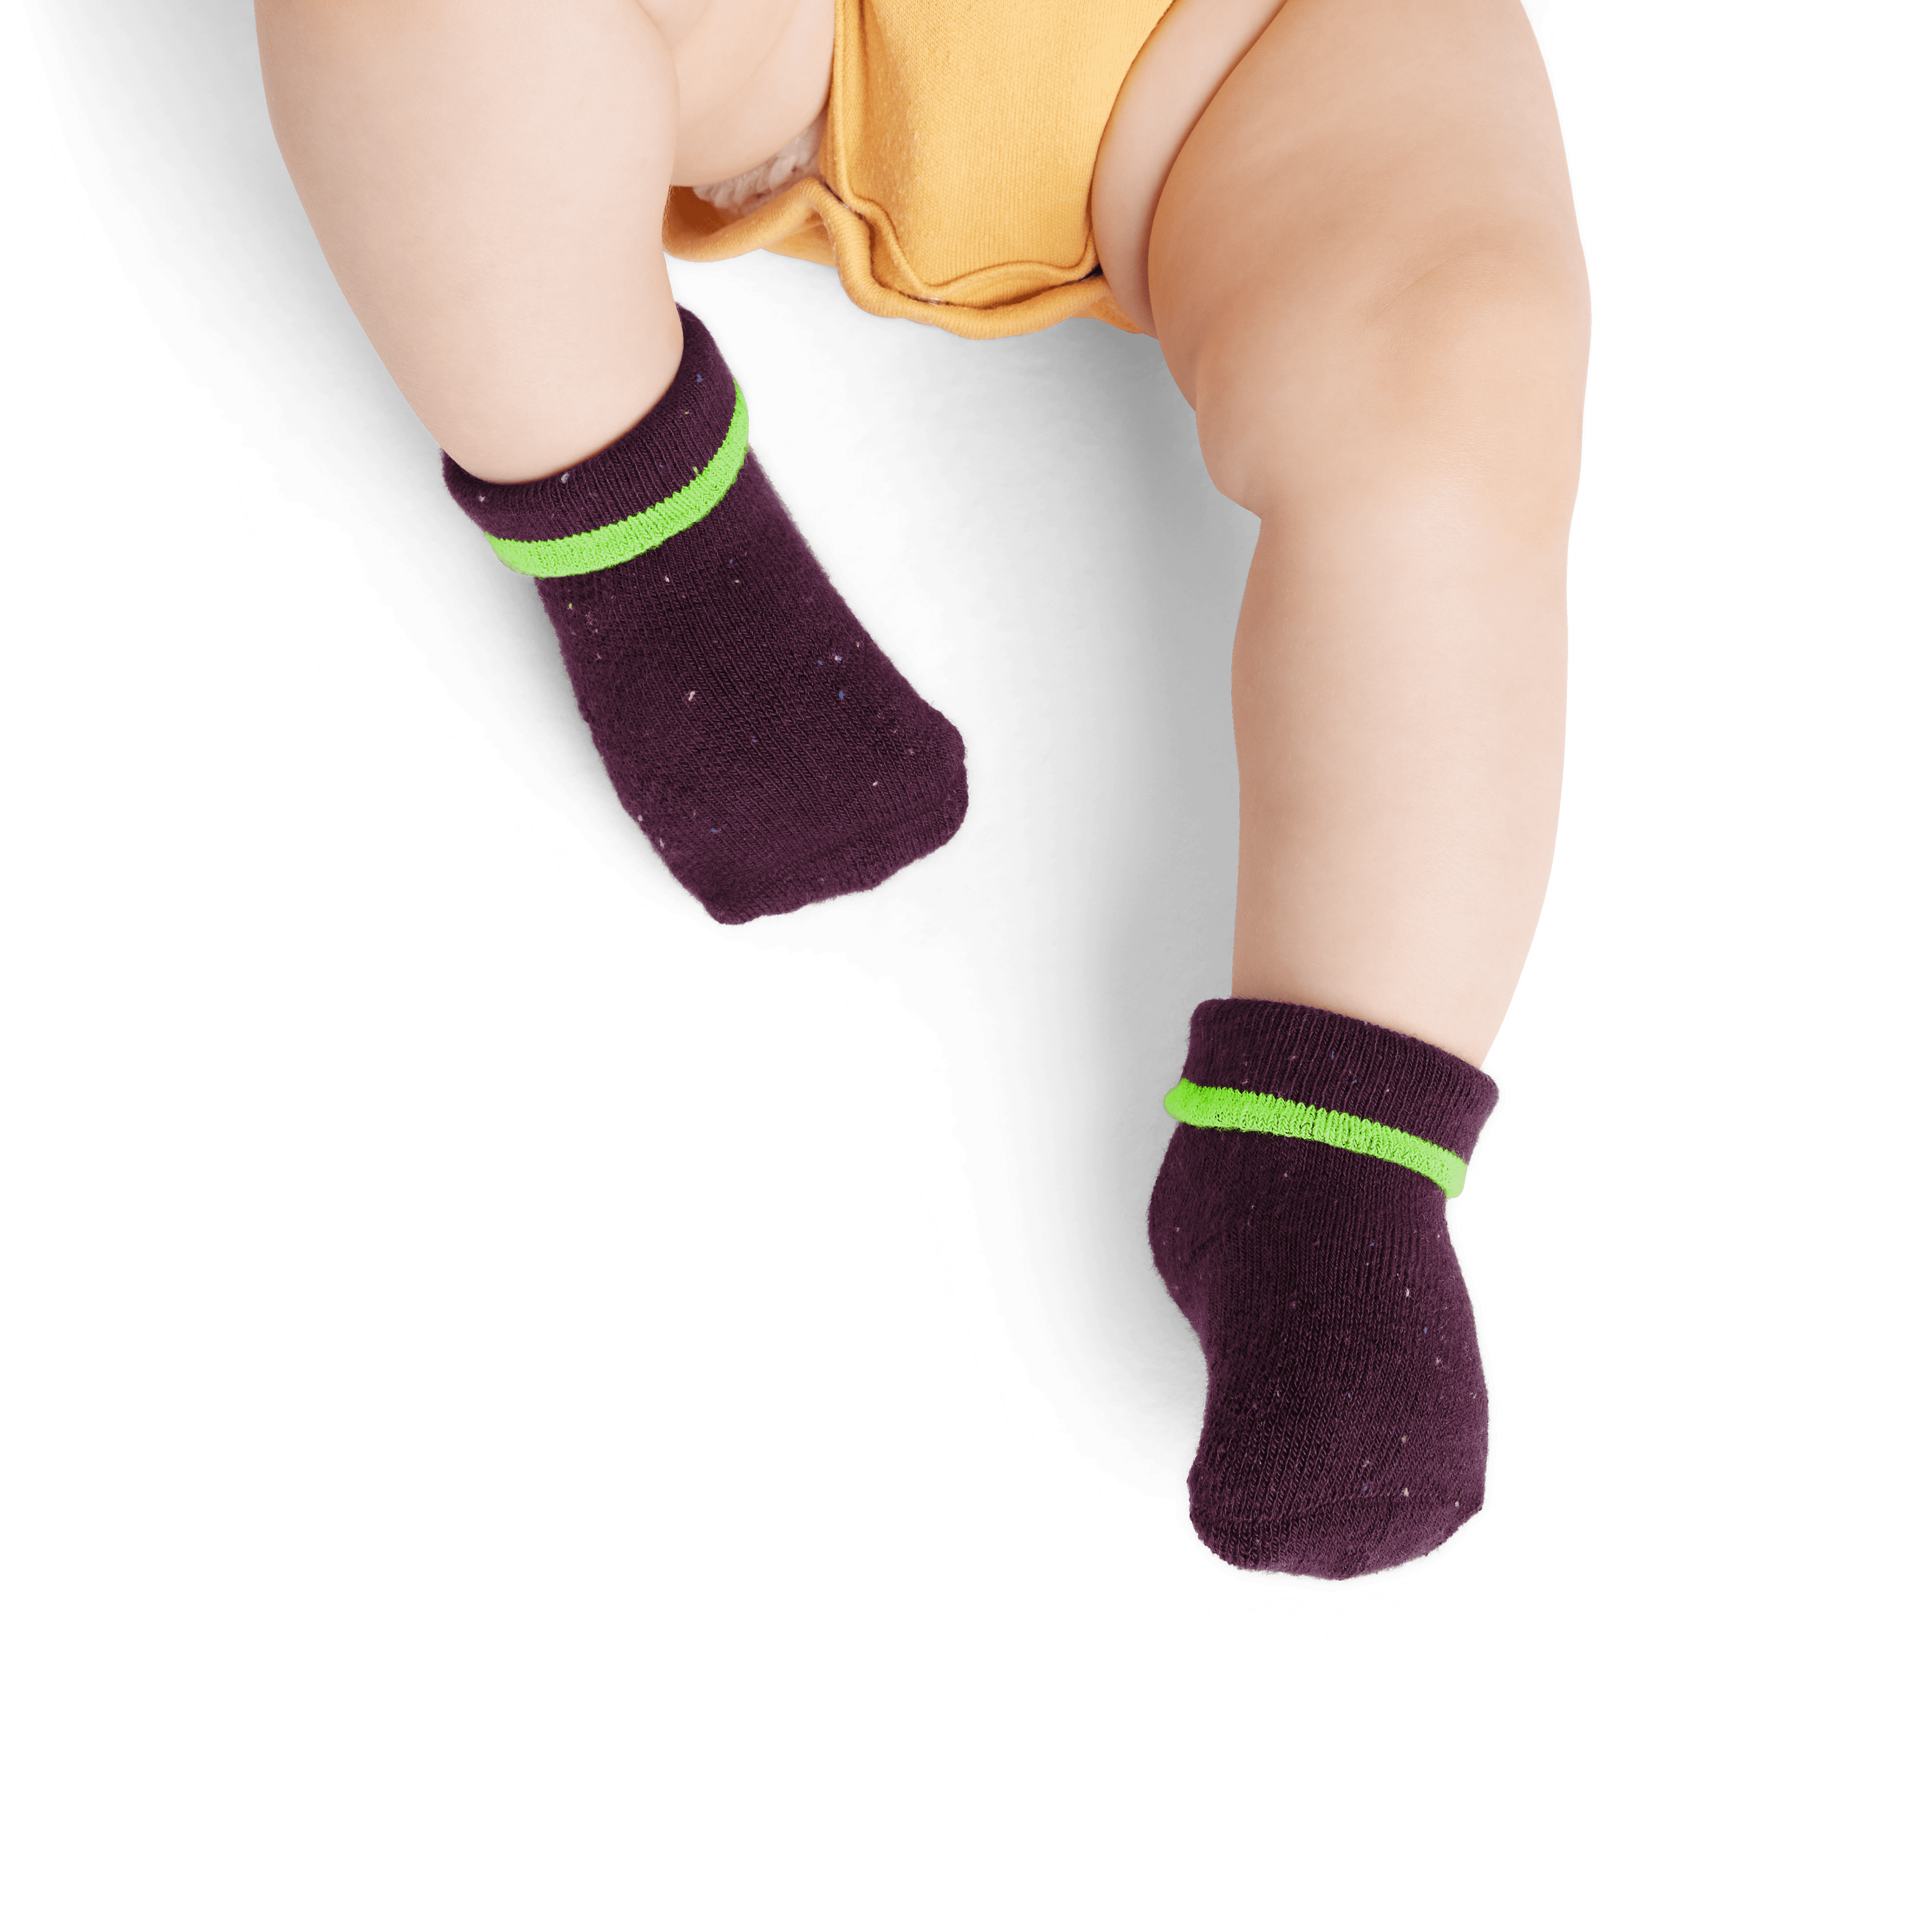 Protections jetables pour serviette post-accouchement - Babyboom Shop -  Babyboom Shop